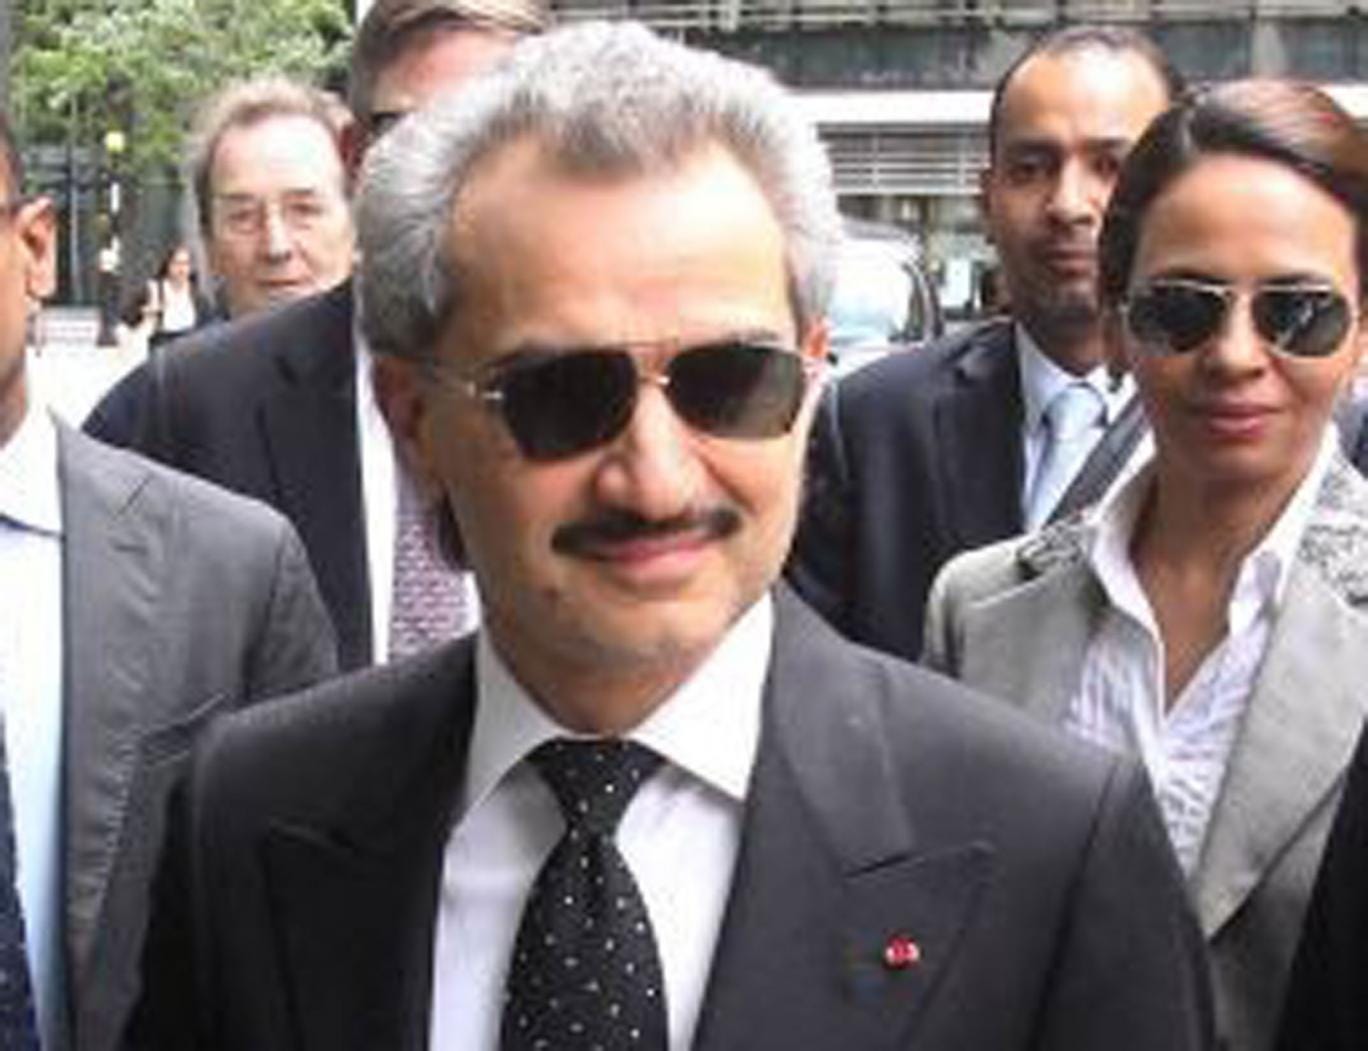 Prince Al-Waleed Bin Talal arrives in court - waleed-pa-v2